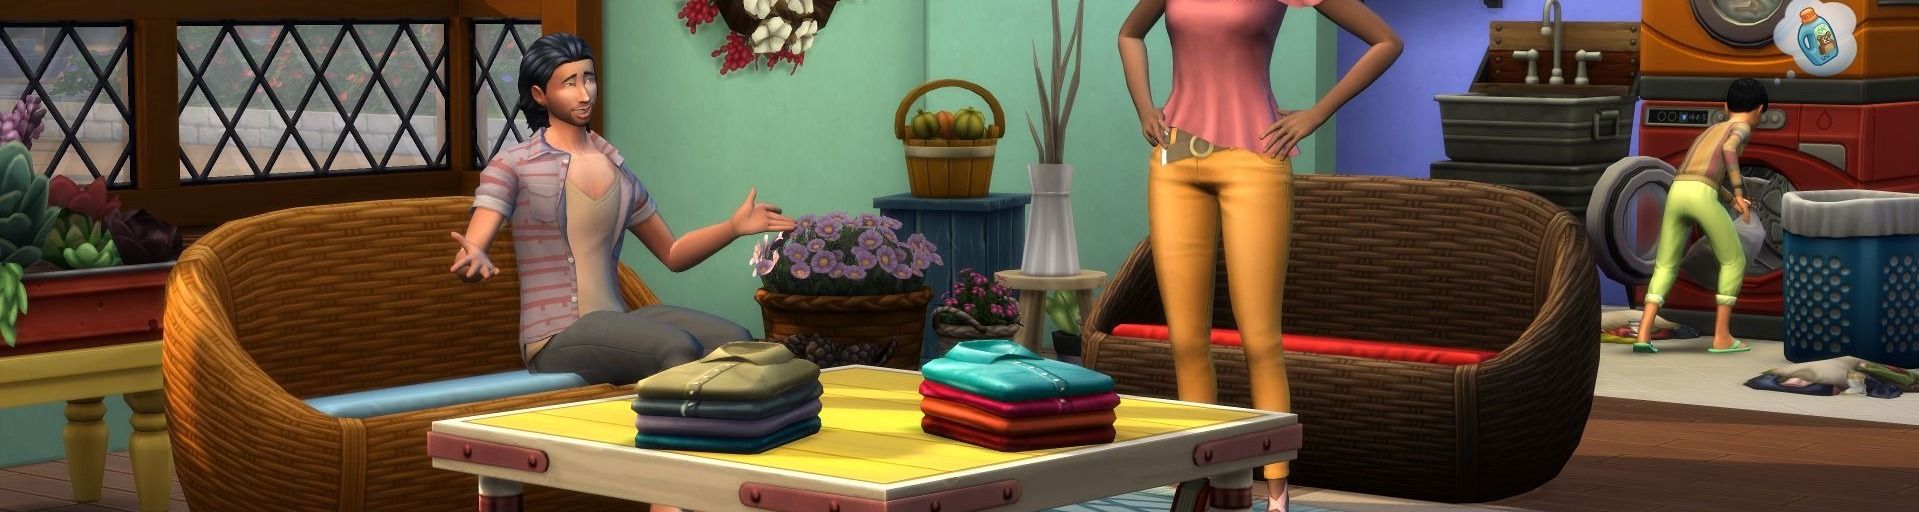 The Sims 4 - Laundry Day Stuff DLC Origin CD Key bg